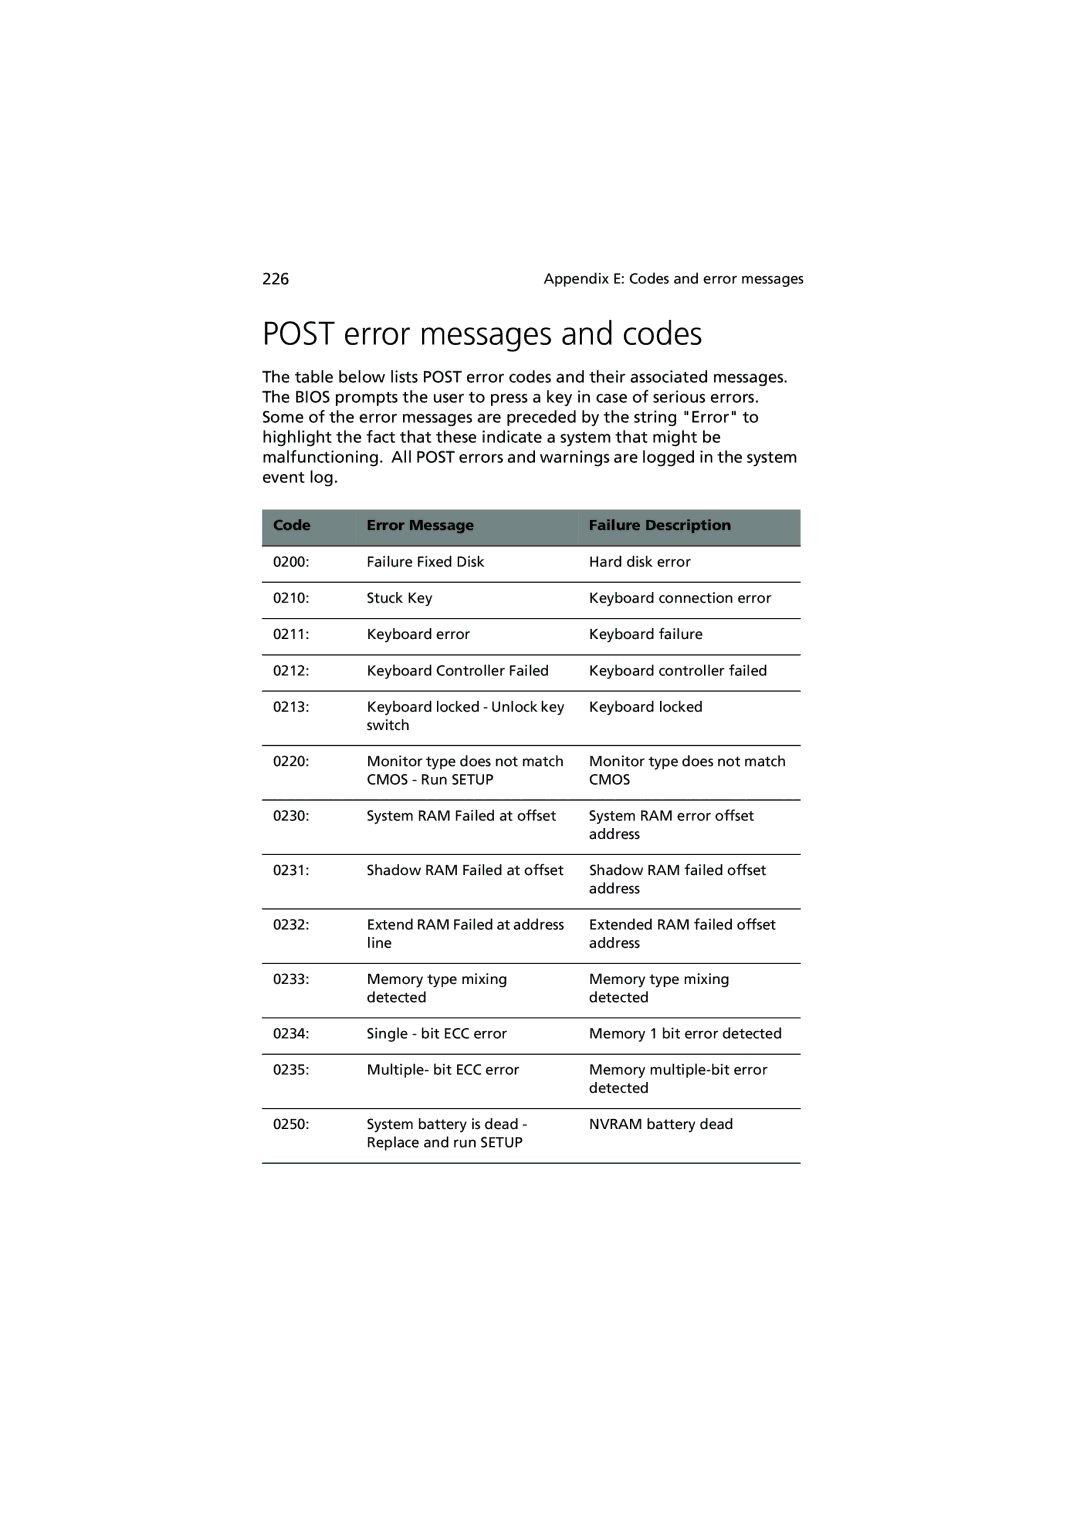 Acer Altos G900 manual Post error messages and codes, Code Error Message Failure Description 